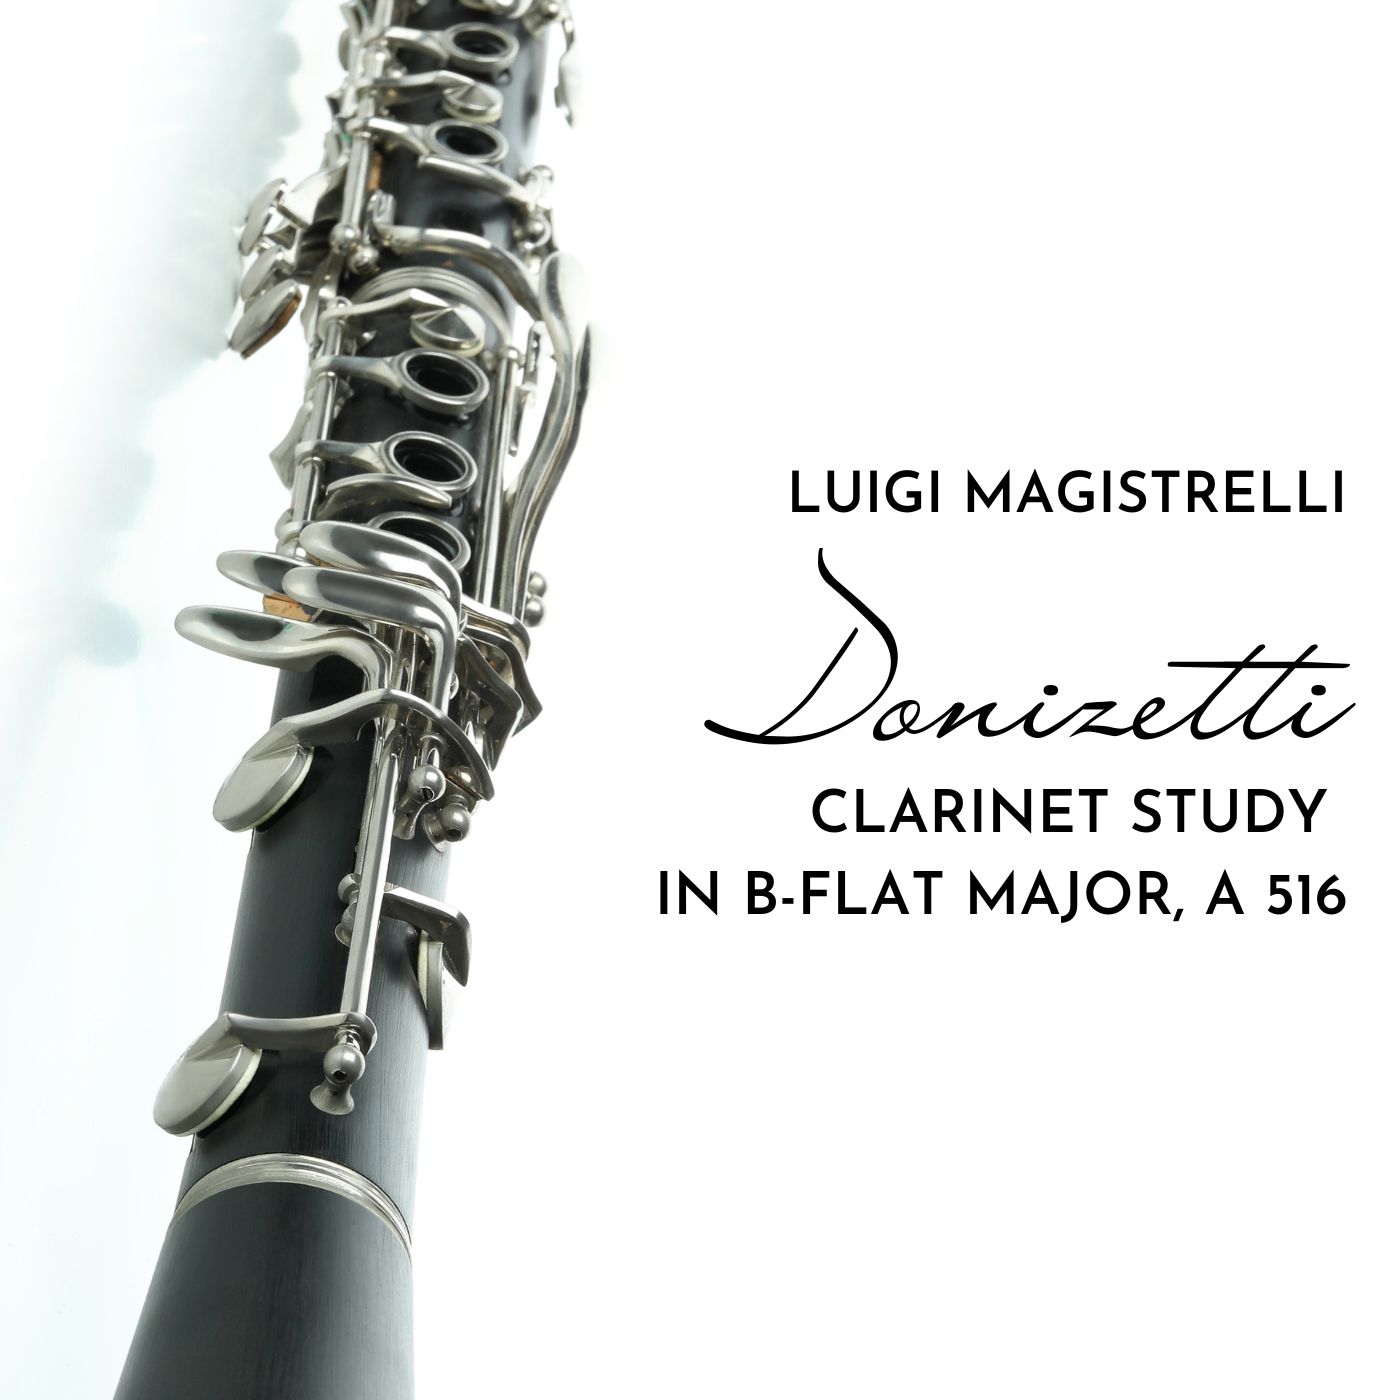 Clarinet Study in B-flat major, A 516